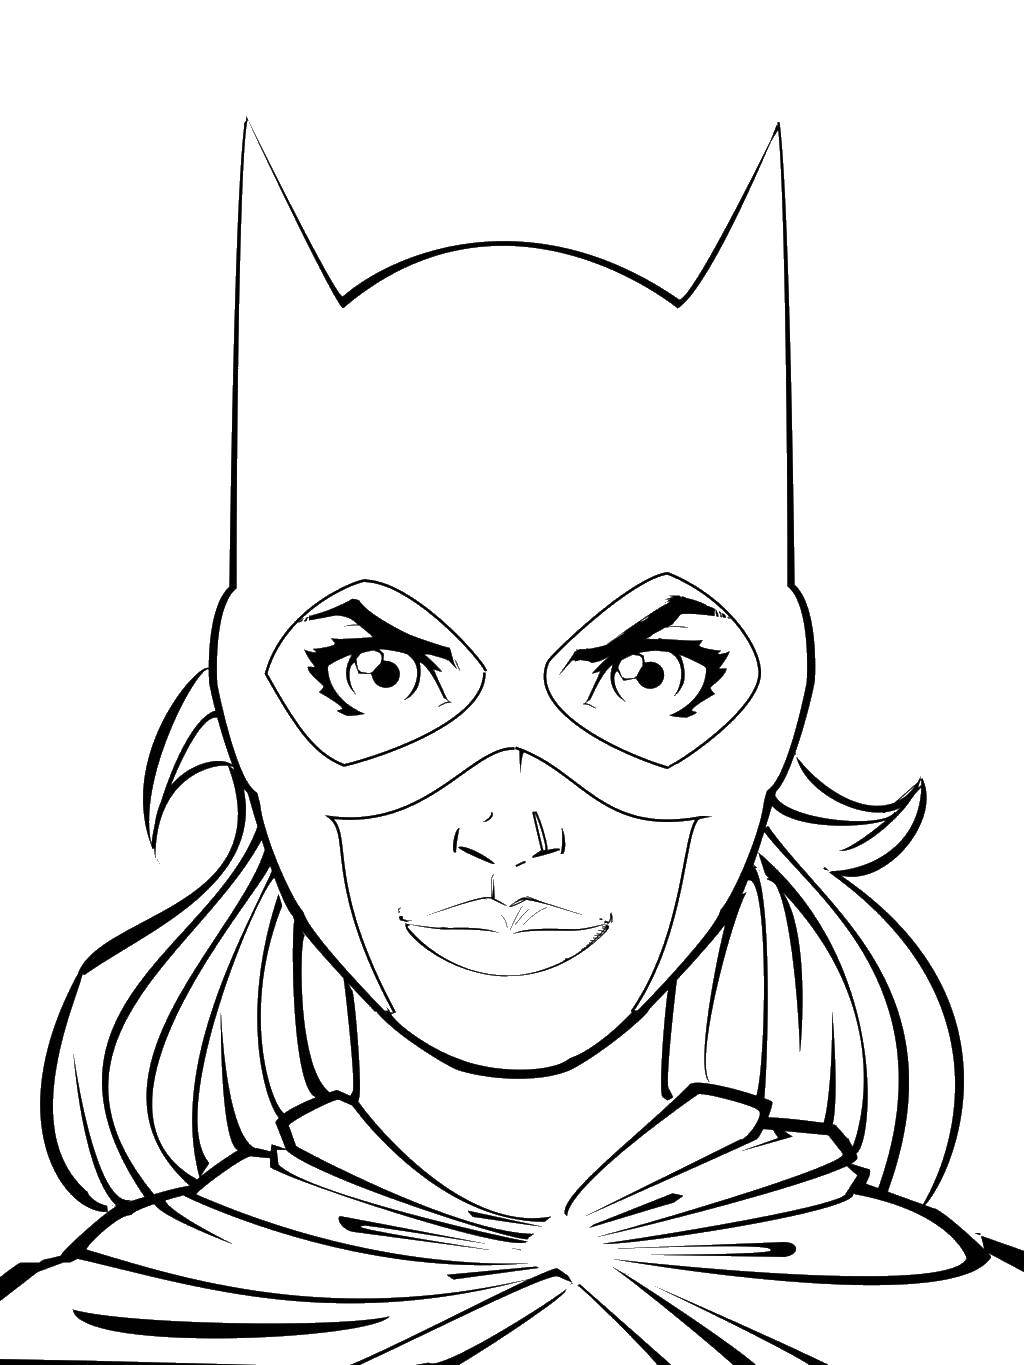 Coloring Girl Batman. Category superheroes. Tags:  superhero, Batman.